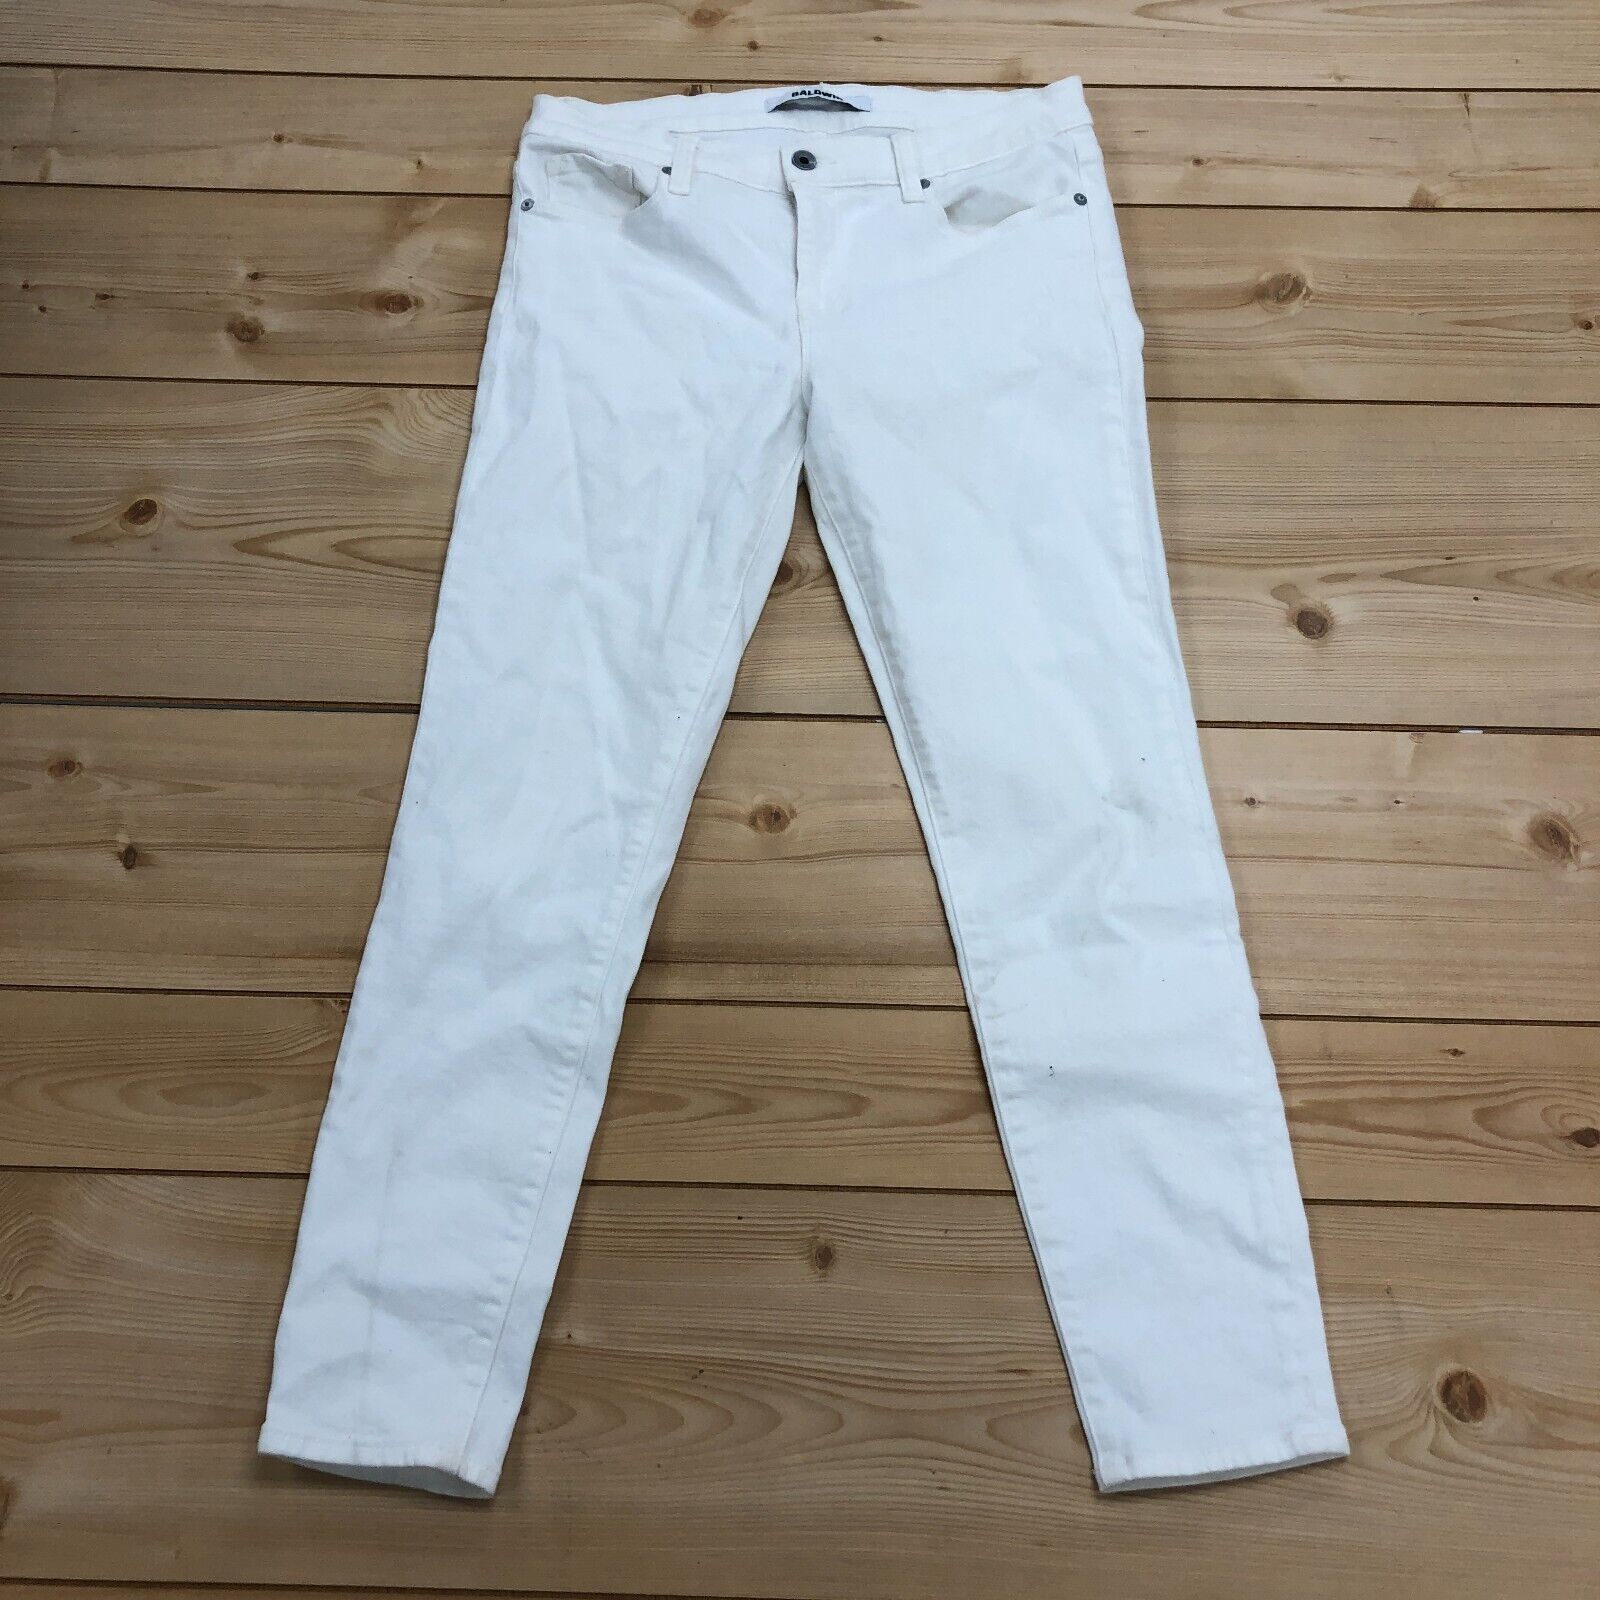 Baldwin White Elastic Waist Flat Front Regular Fit Denim Jeans Adult Size 29x27